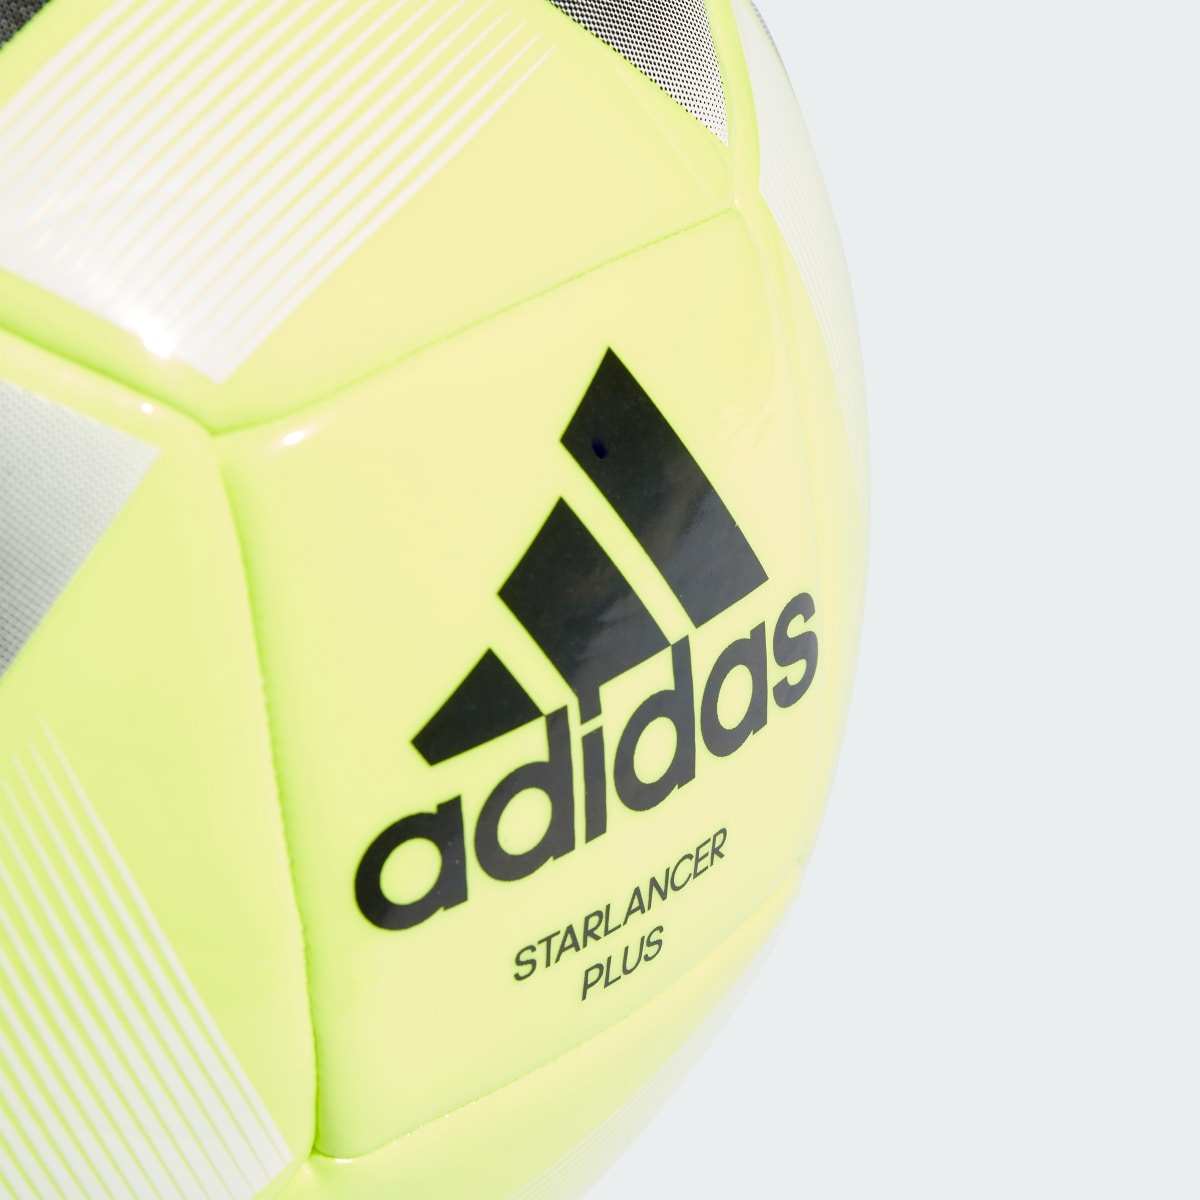 Adidas Starlancer Plus Football. 5